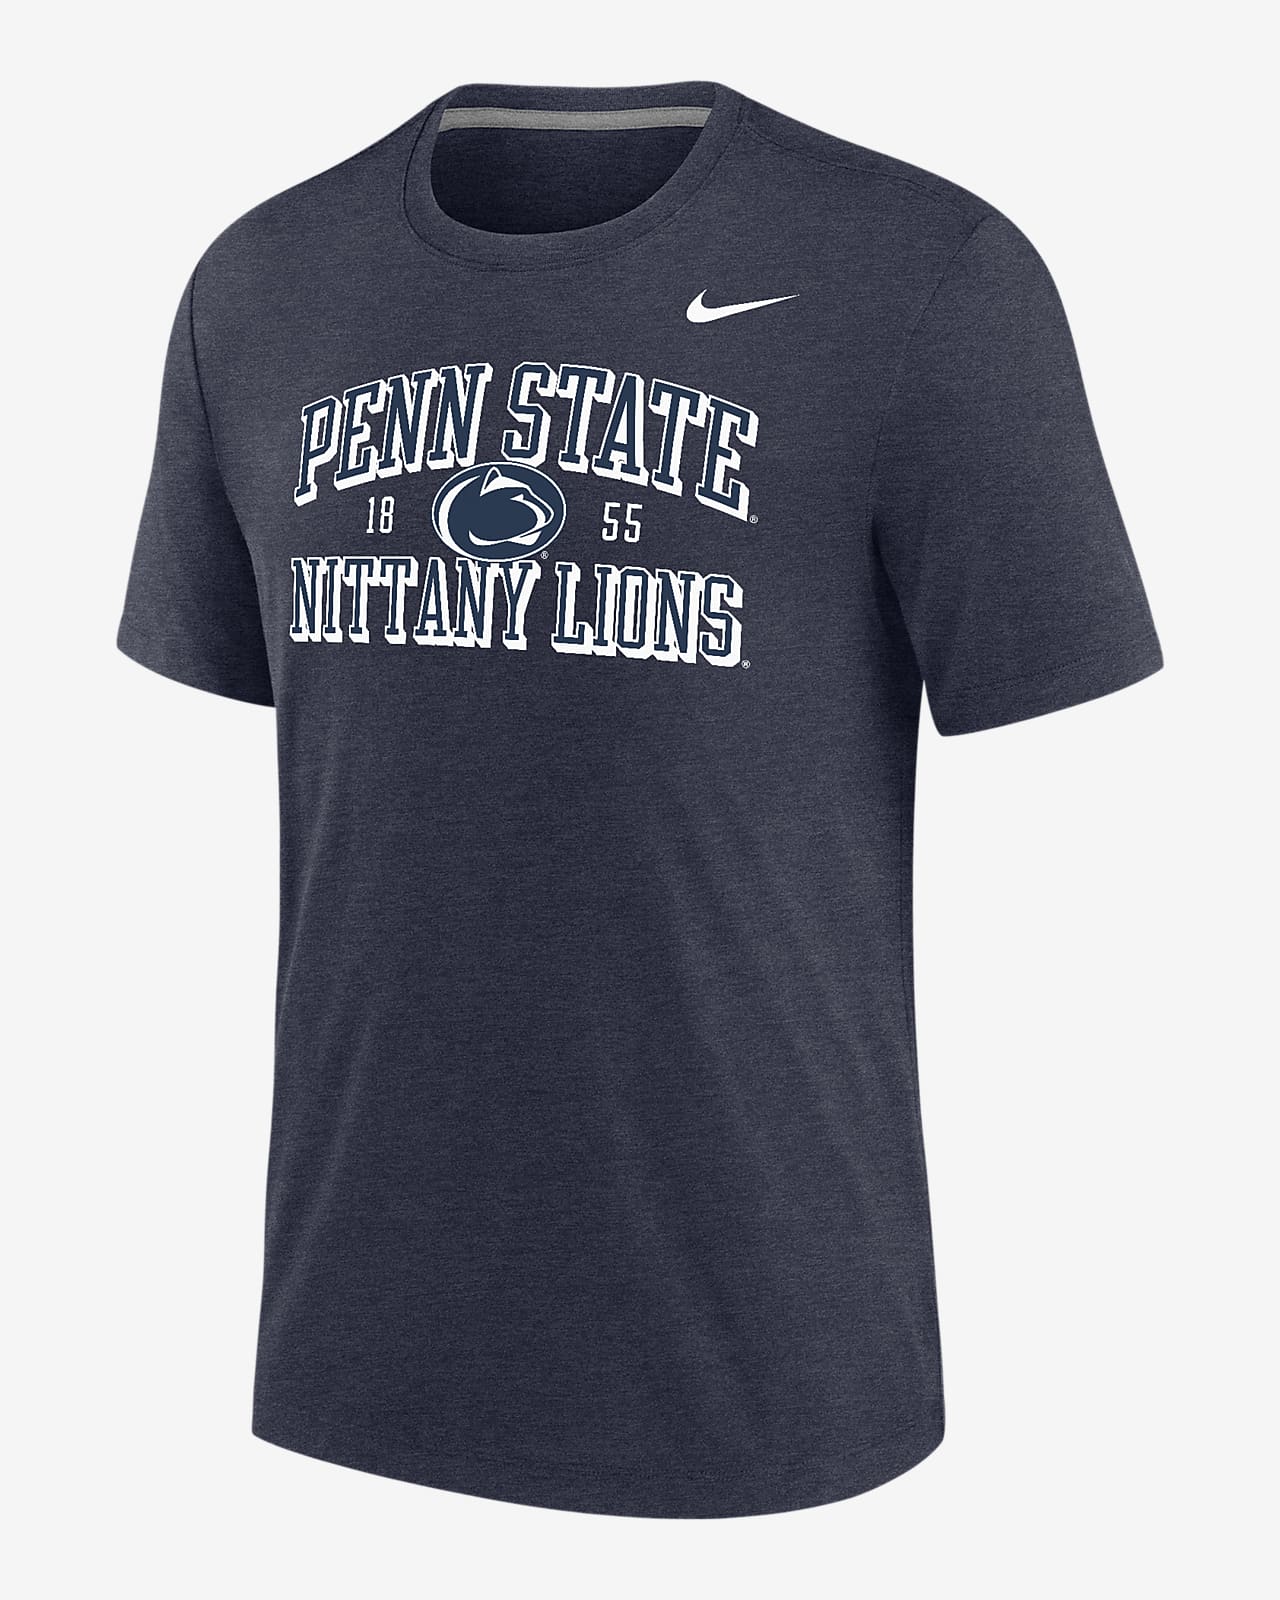 Playera Nike College para hombre Penn State